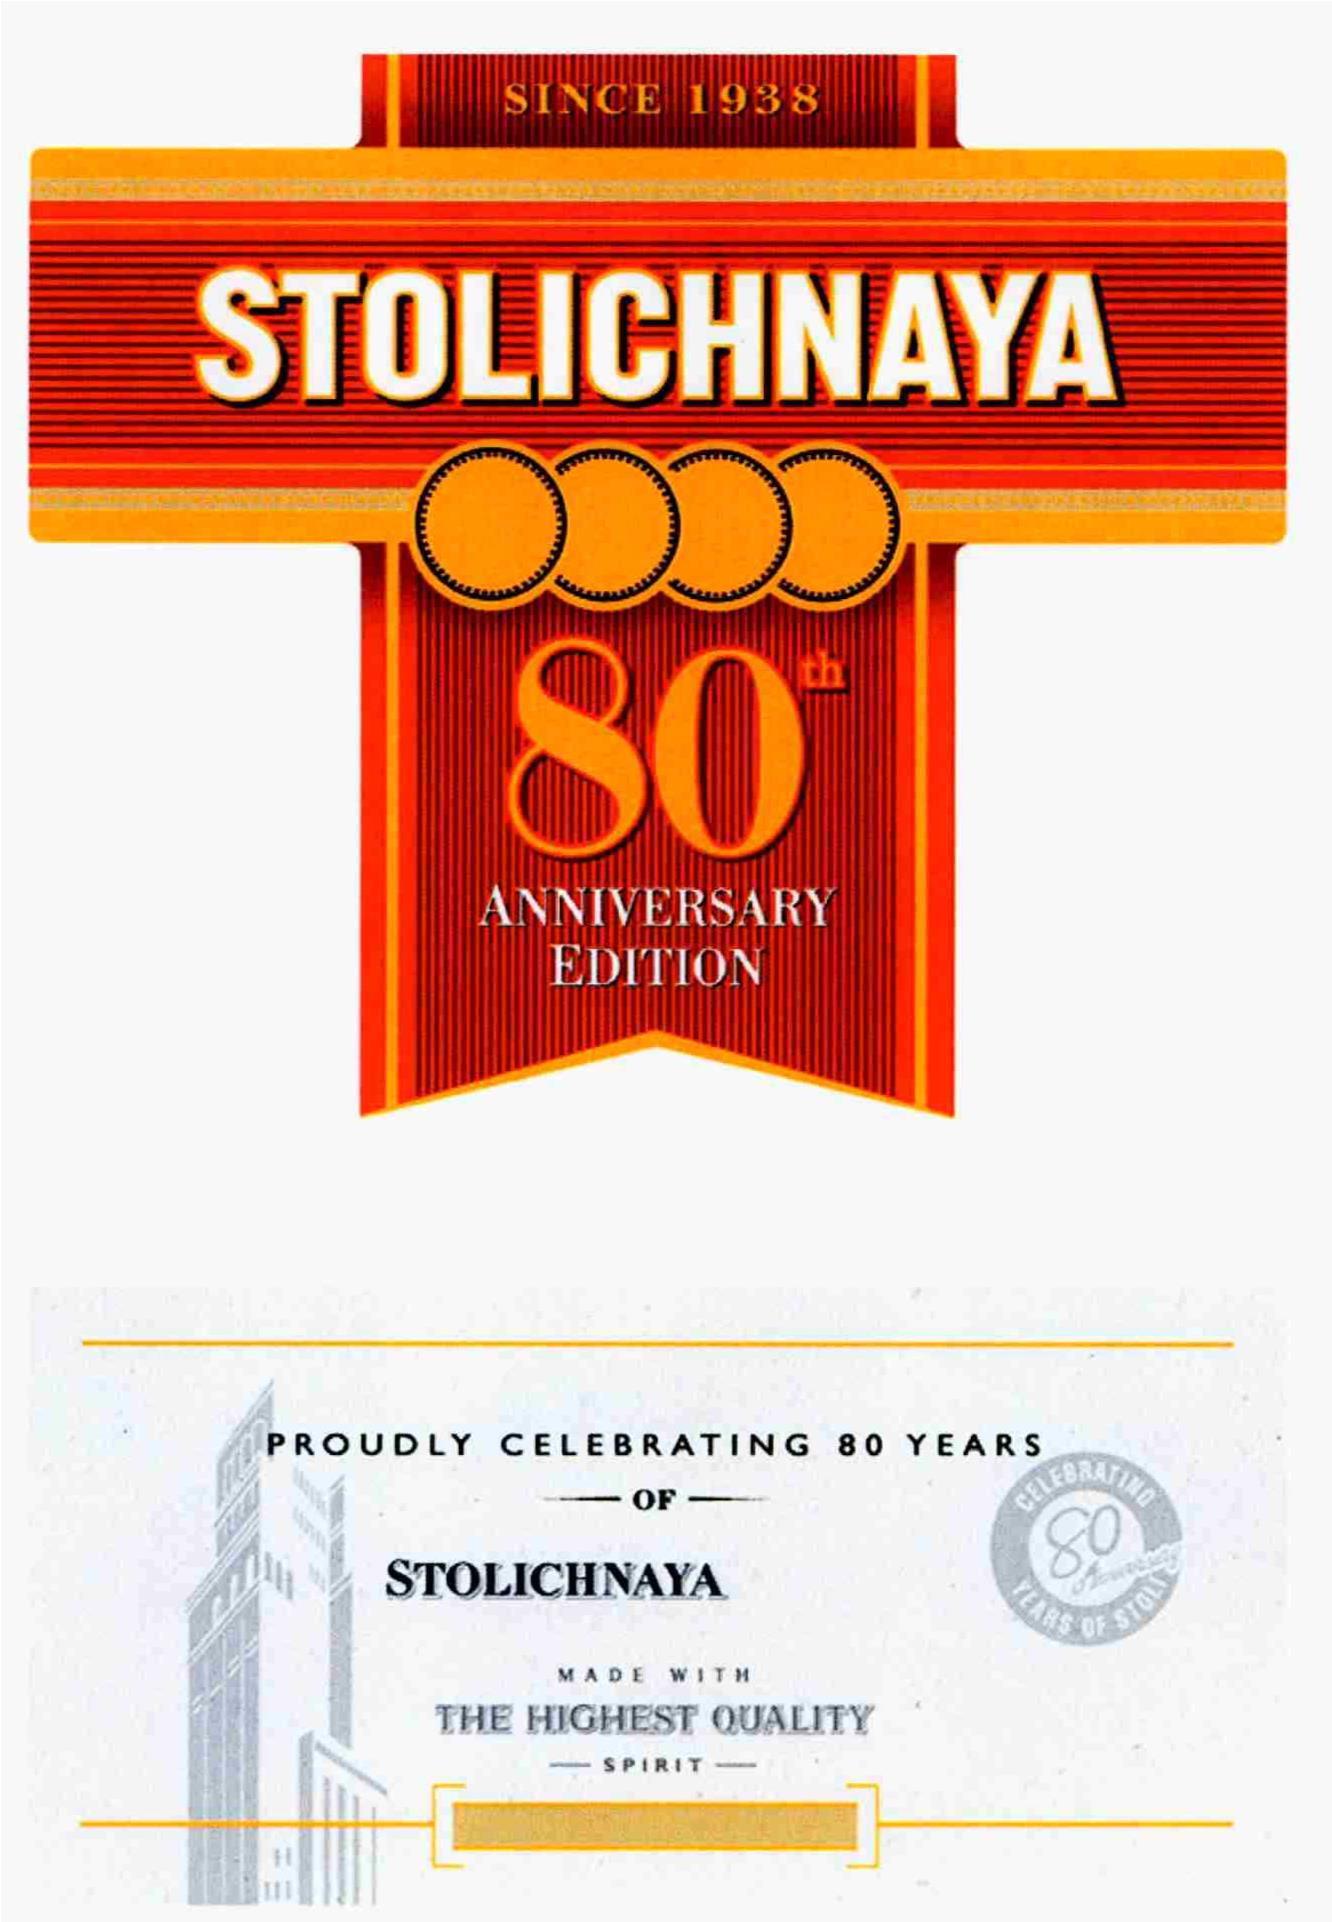 Trademark Logo SINCE 1938 STOLICHNAYA 80TH ANNIVERSARYEDITION PROUDLY CELEBRATING 80 YEARS OF STOLICHNAYA MADE WITH THE HIGHEST QUALITY SPIRIT CELEBRATING 80 ANNIVERSARY YEARS OF STOLI